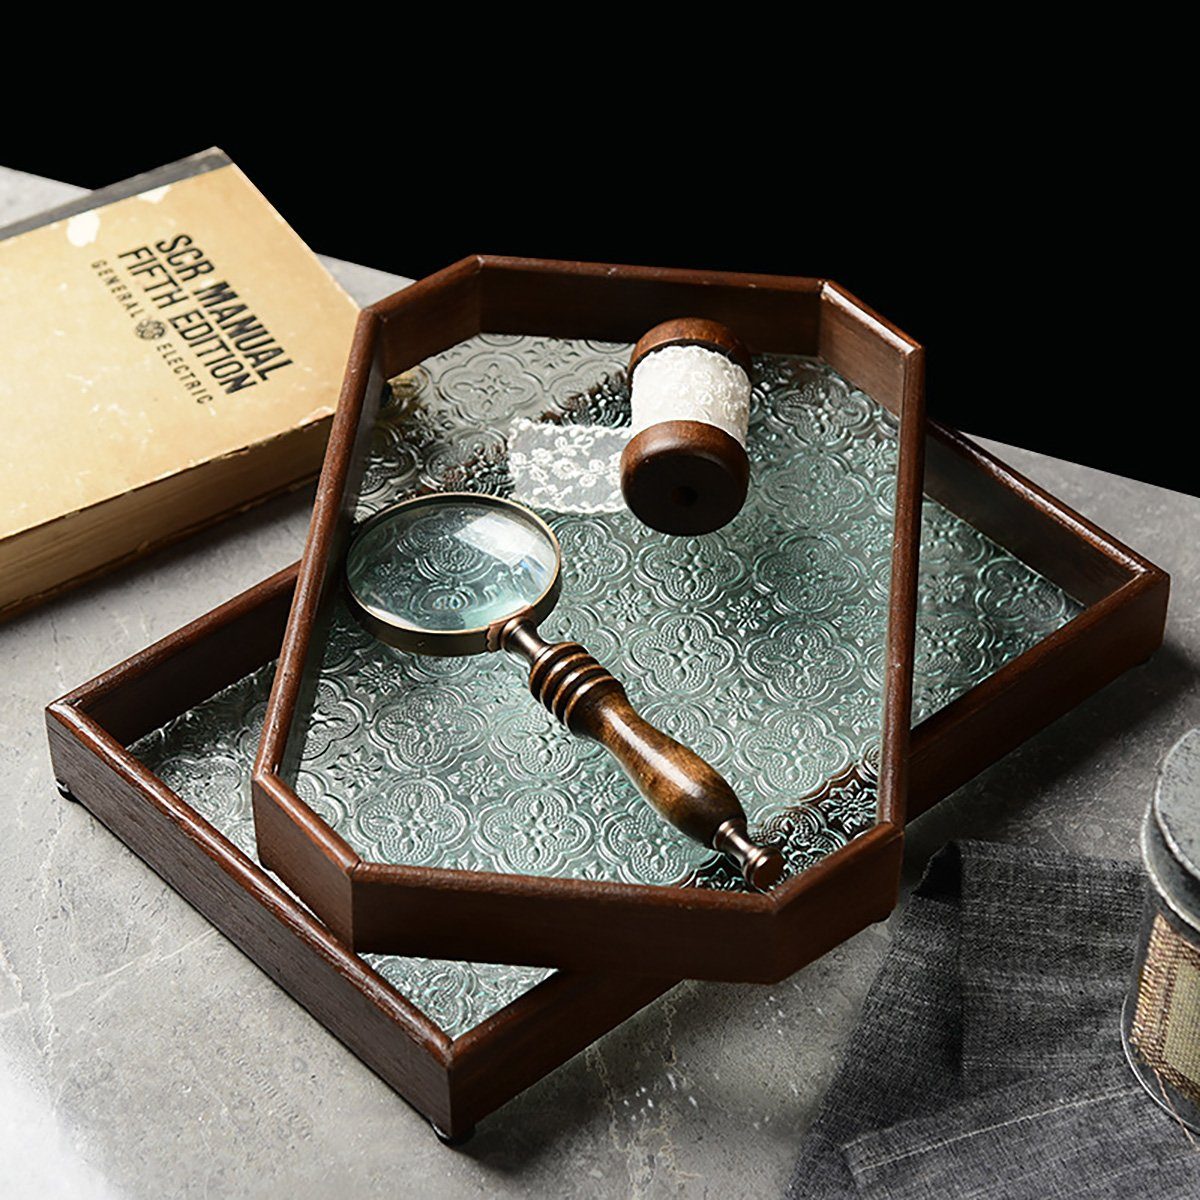 Holz, Braun Glastablett, götäzer Badezimmer-Aufbewahrungstablett aus Retro-Kaffeetablett Tablett